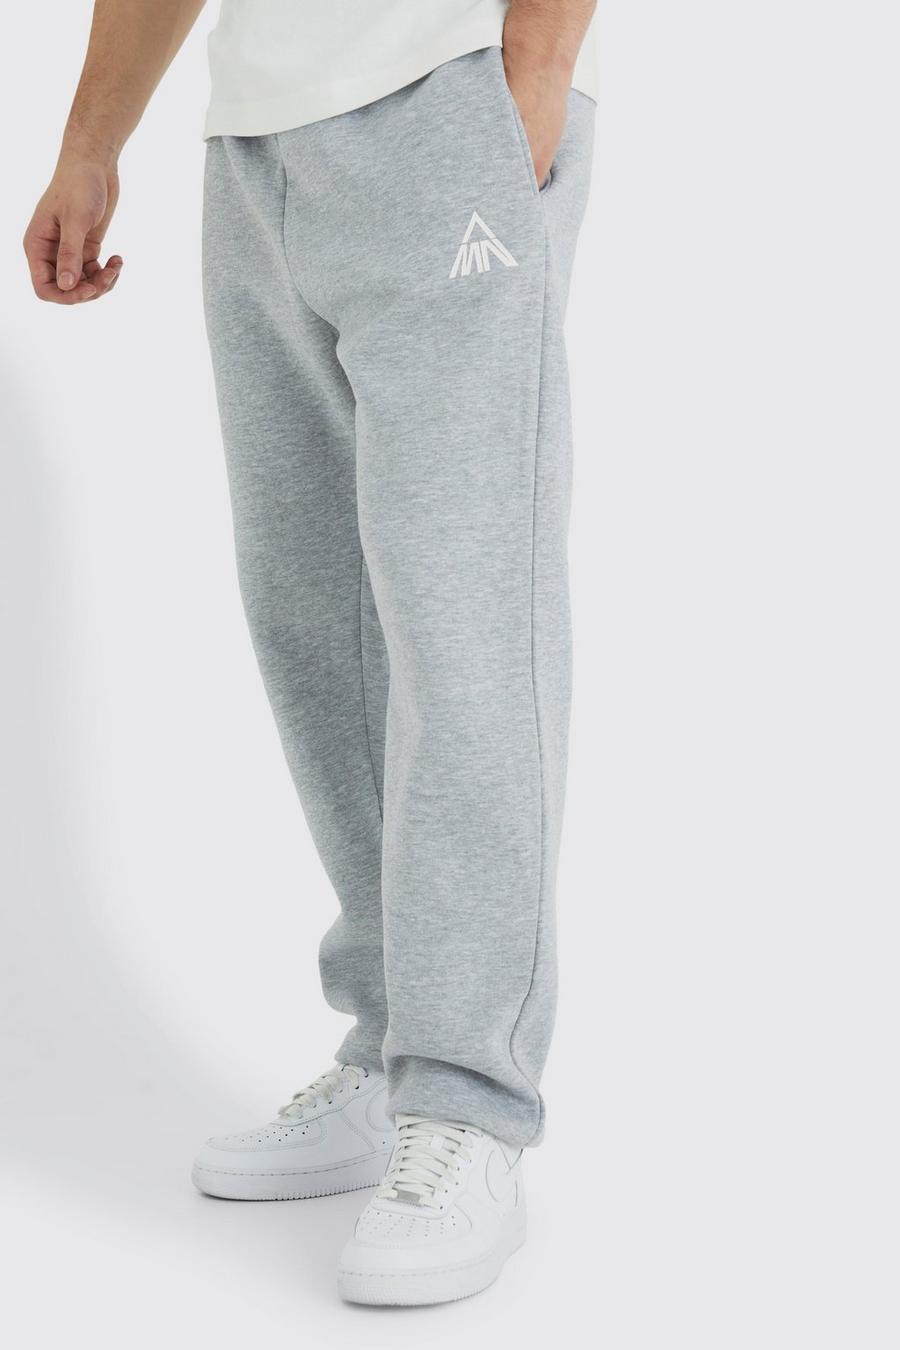 Pantaloni tuta Tall Core Fit con logo Man, Grey marl